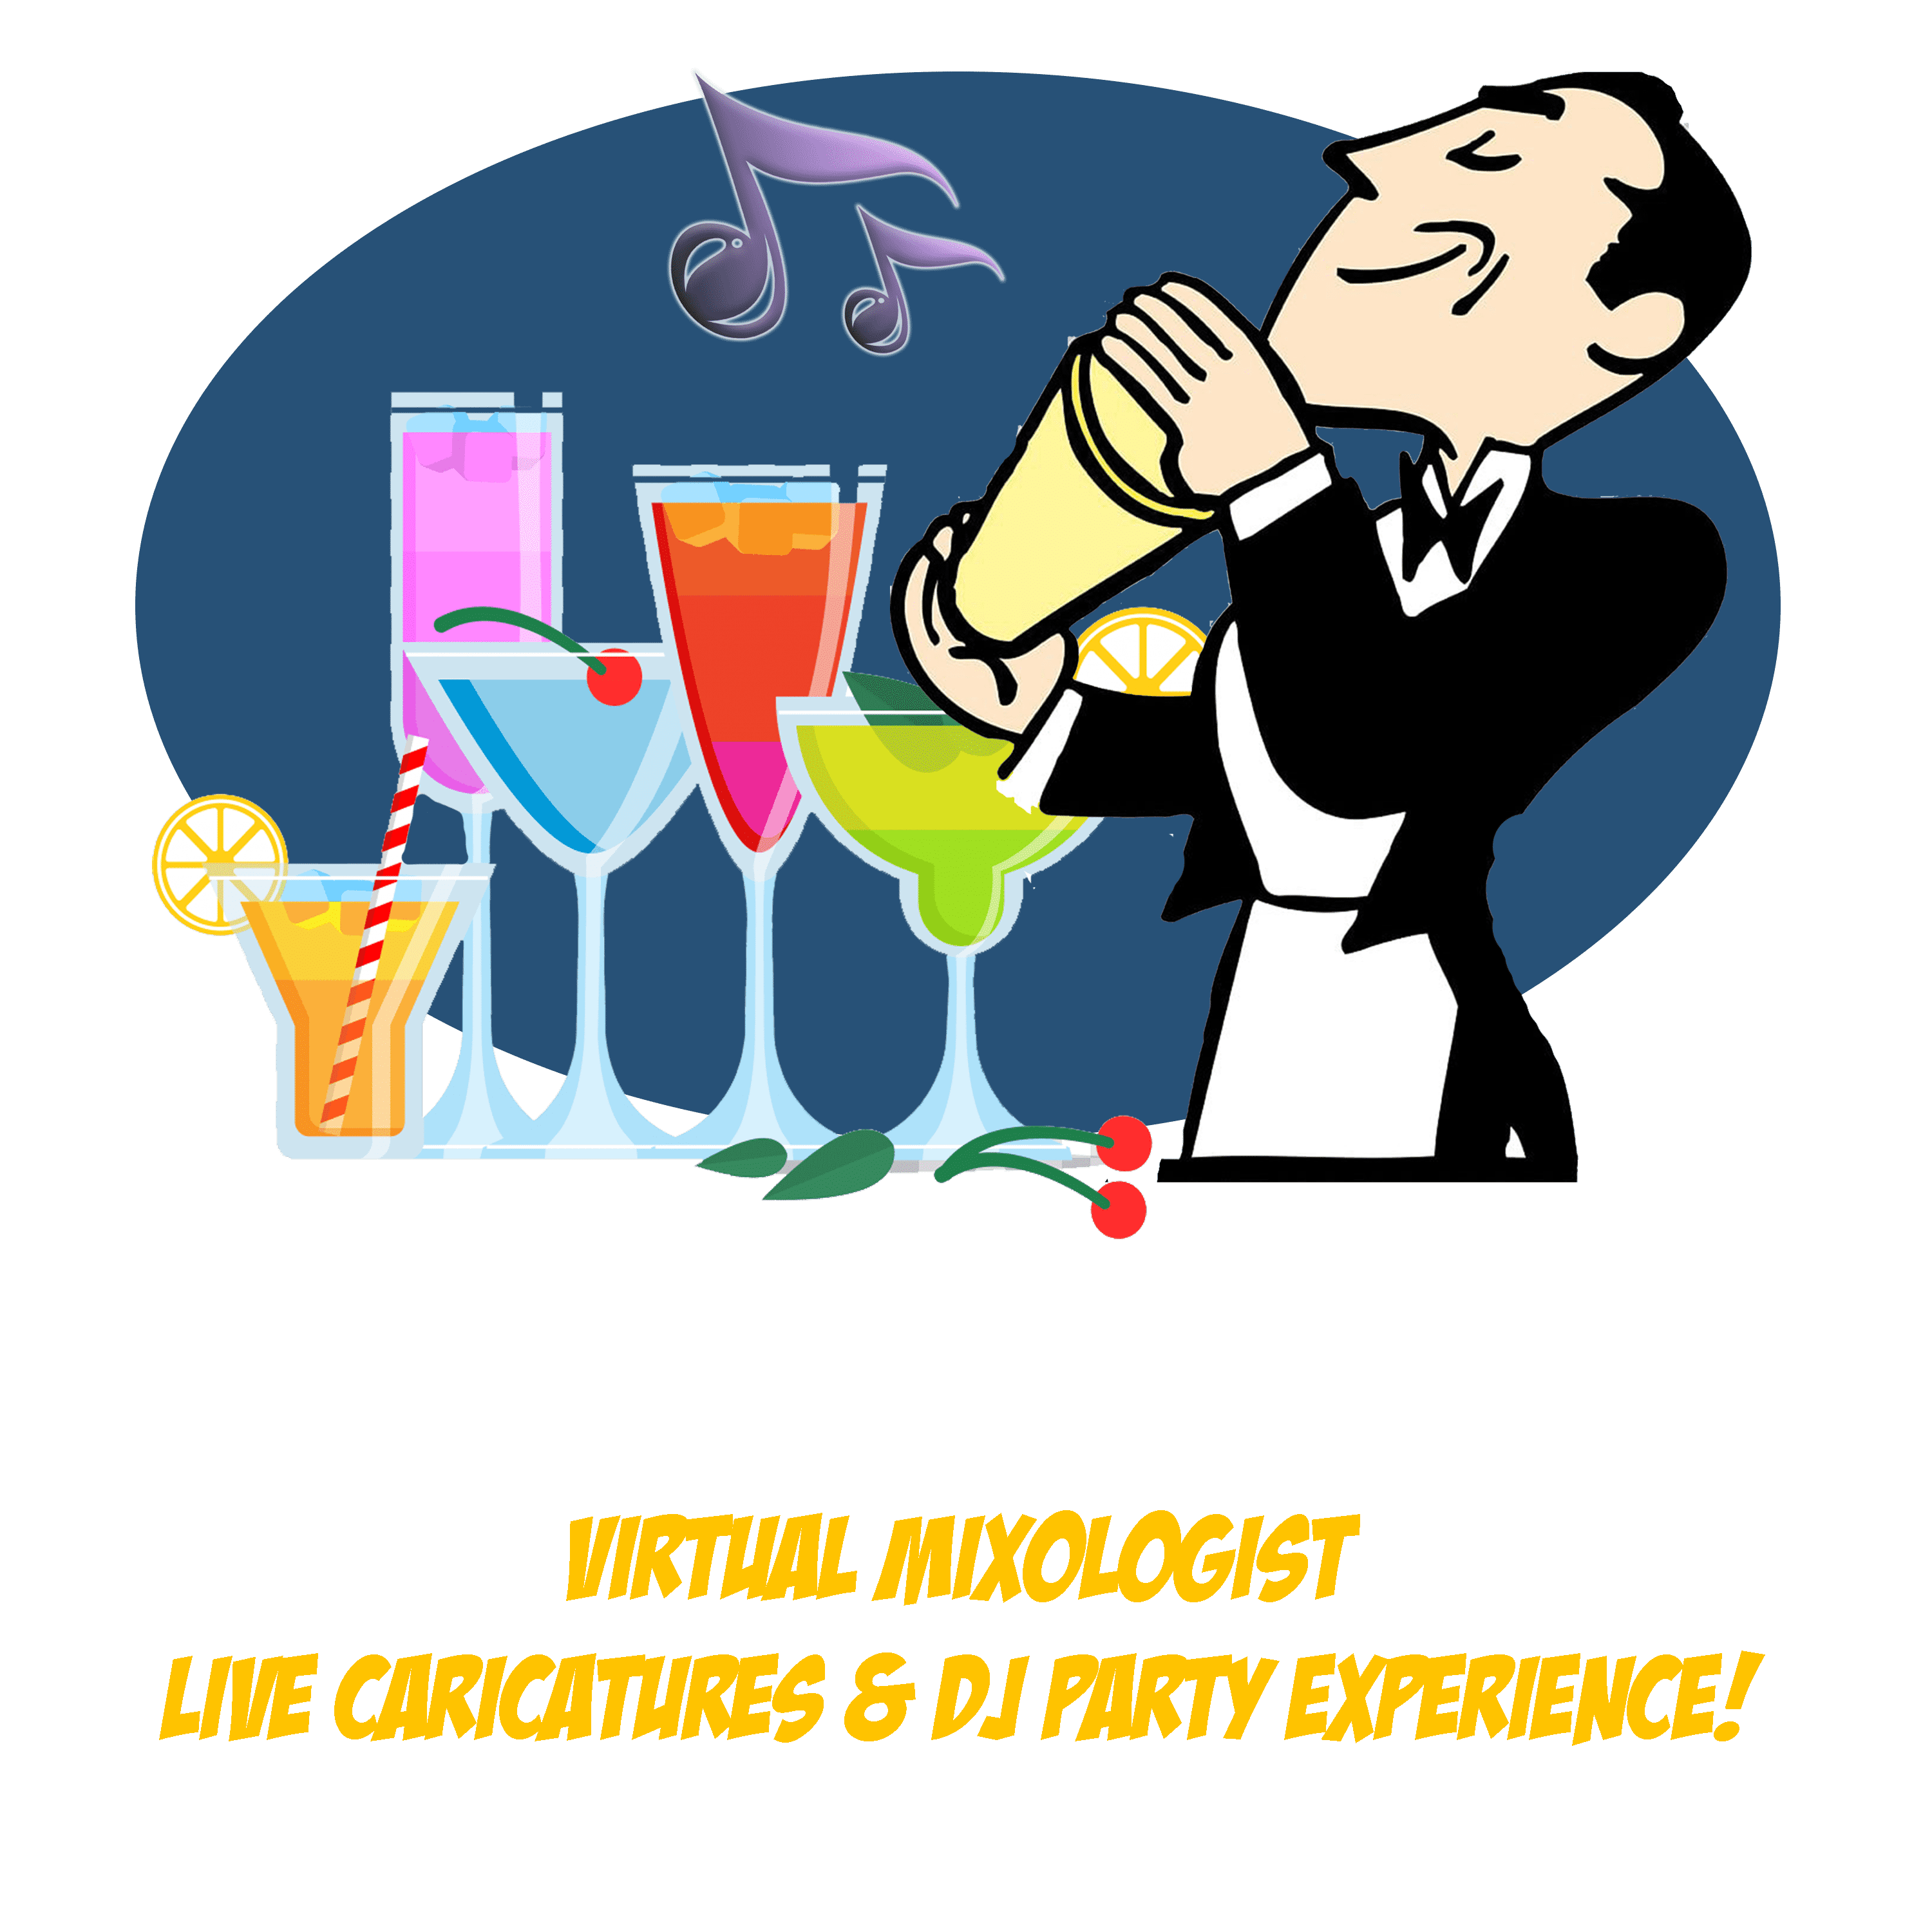 Virtual Mixologist, Virtual Caricatures, Virtual DJ, Virtual Party Ideas, Virtual Team Building, Virtual Party Experience